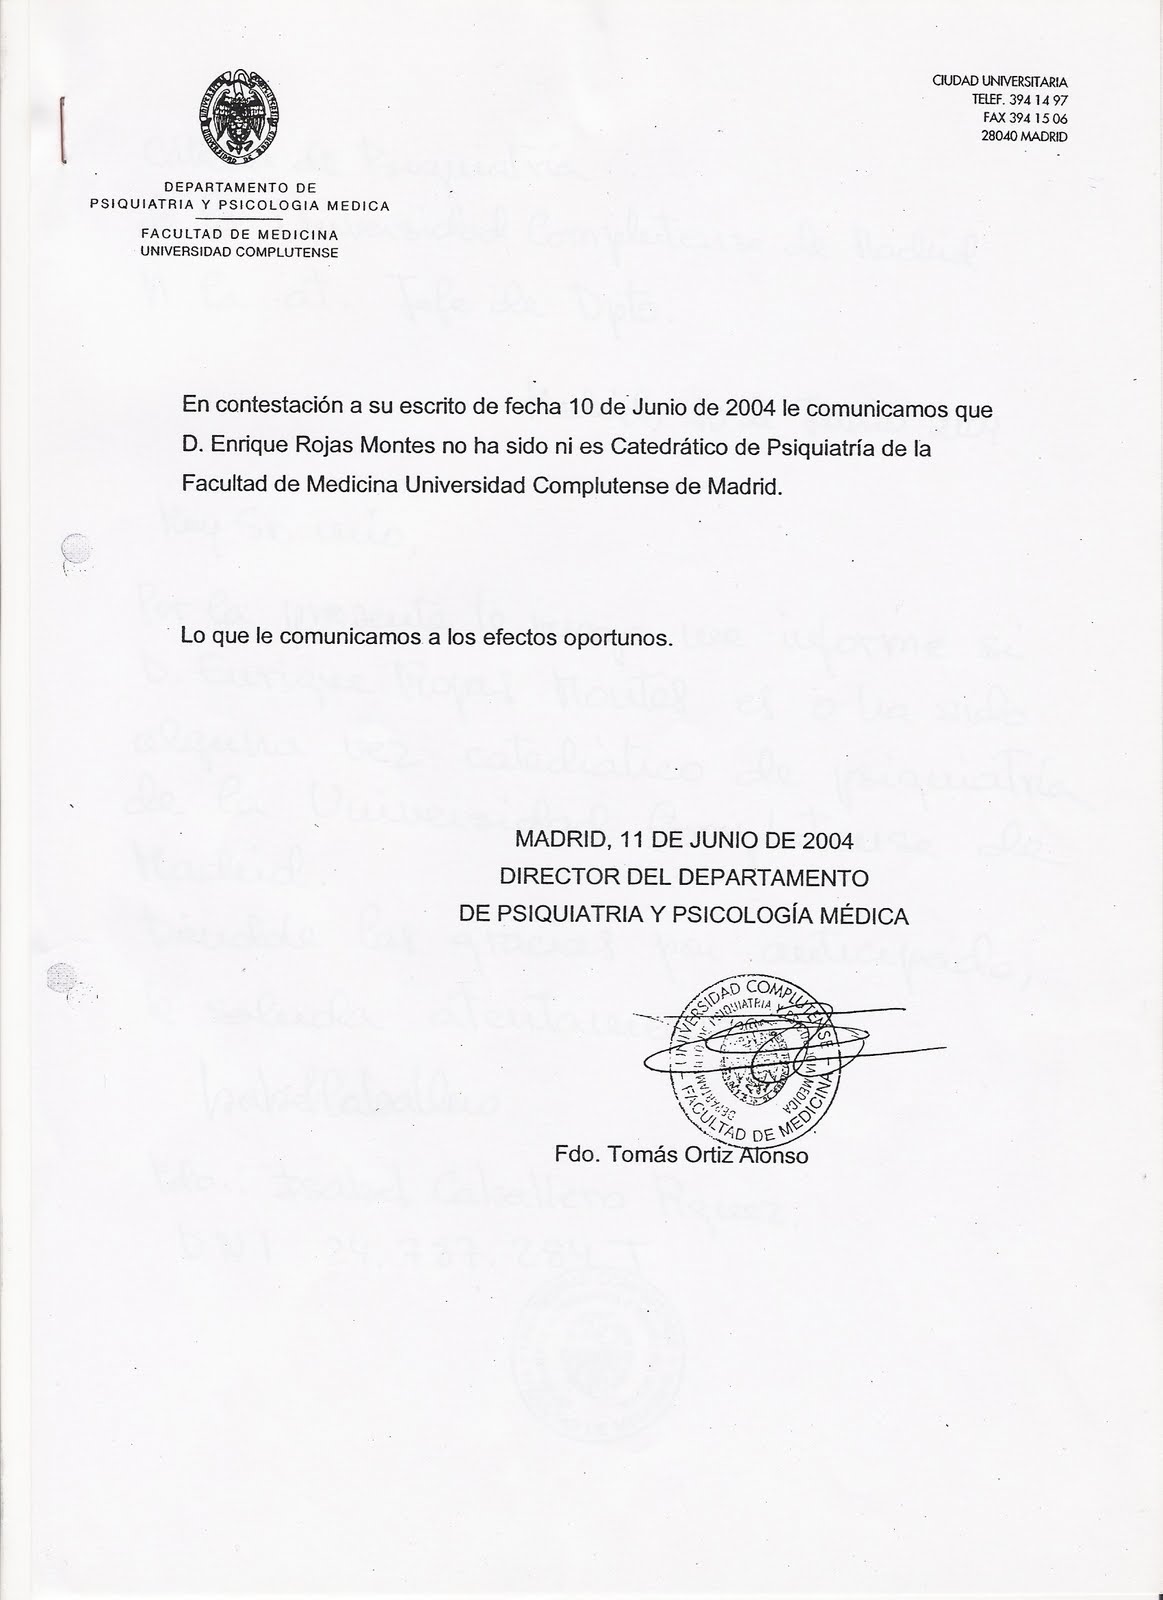 [Enrique+rojas+documento+UCM.jpg]